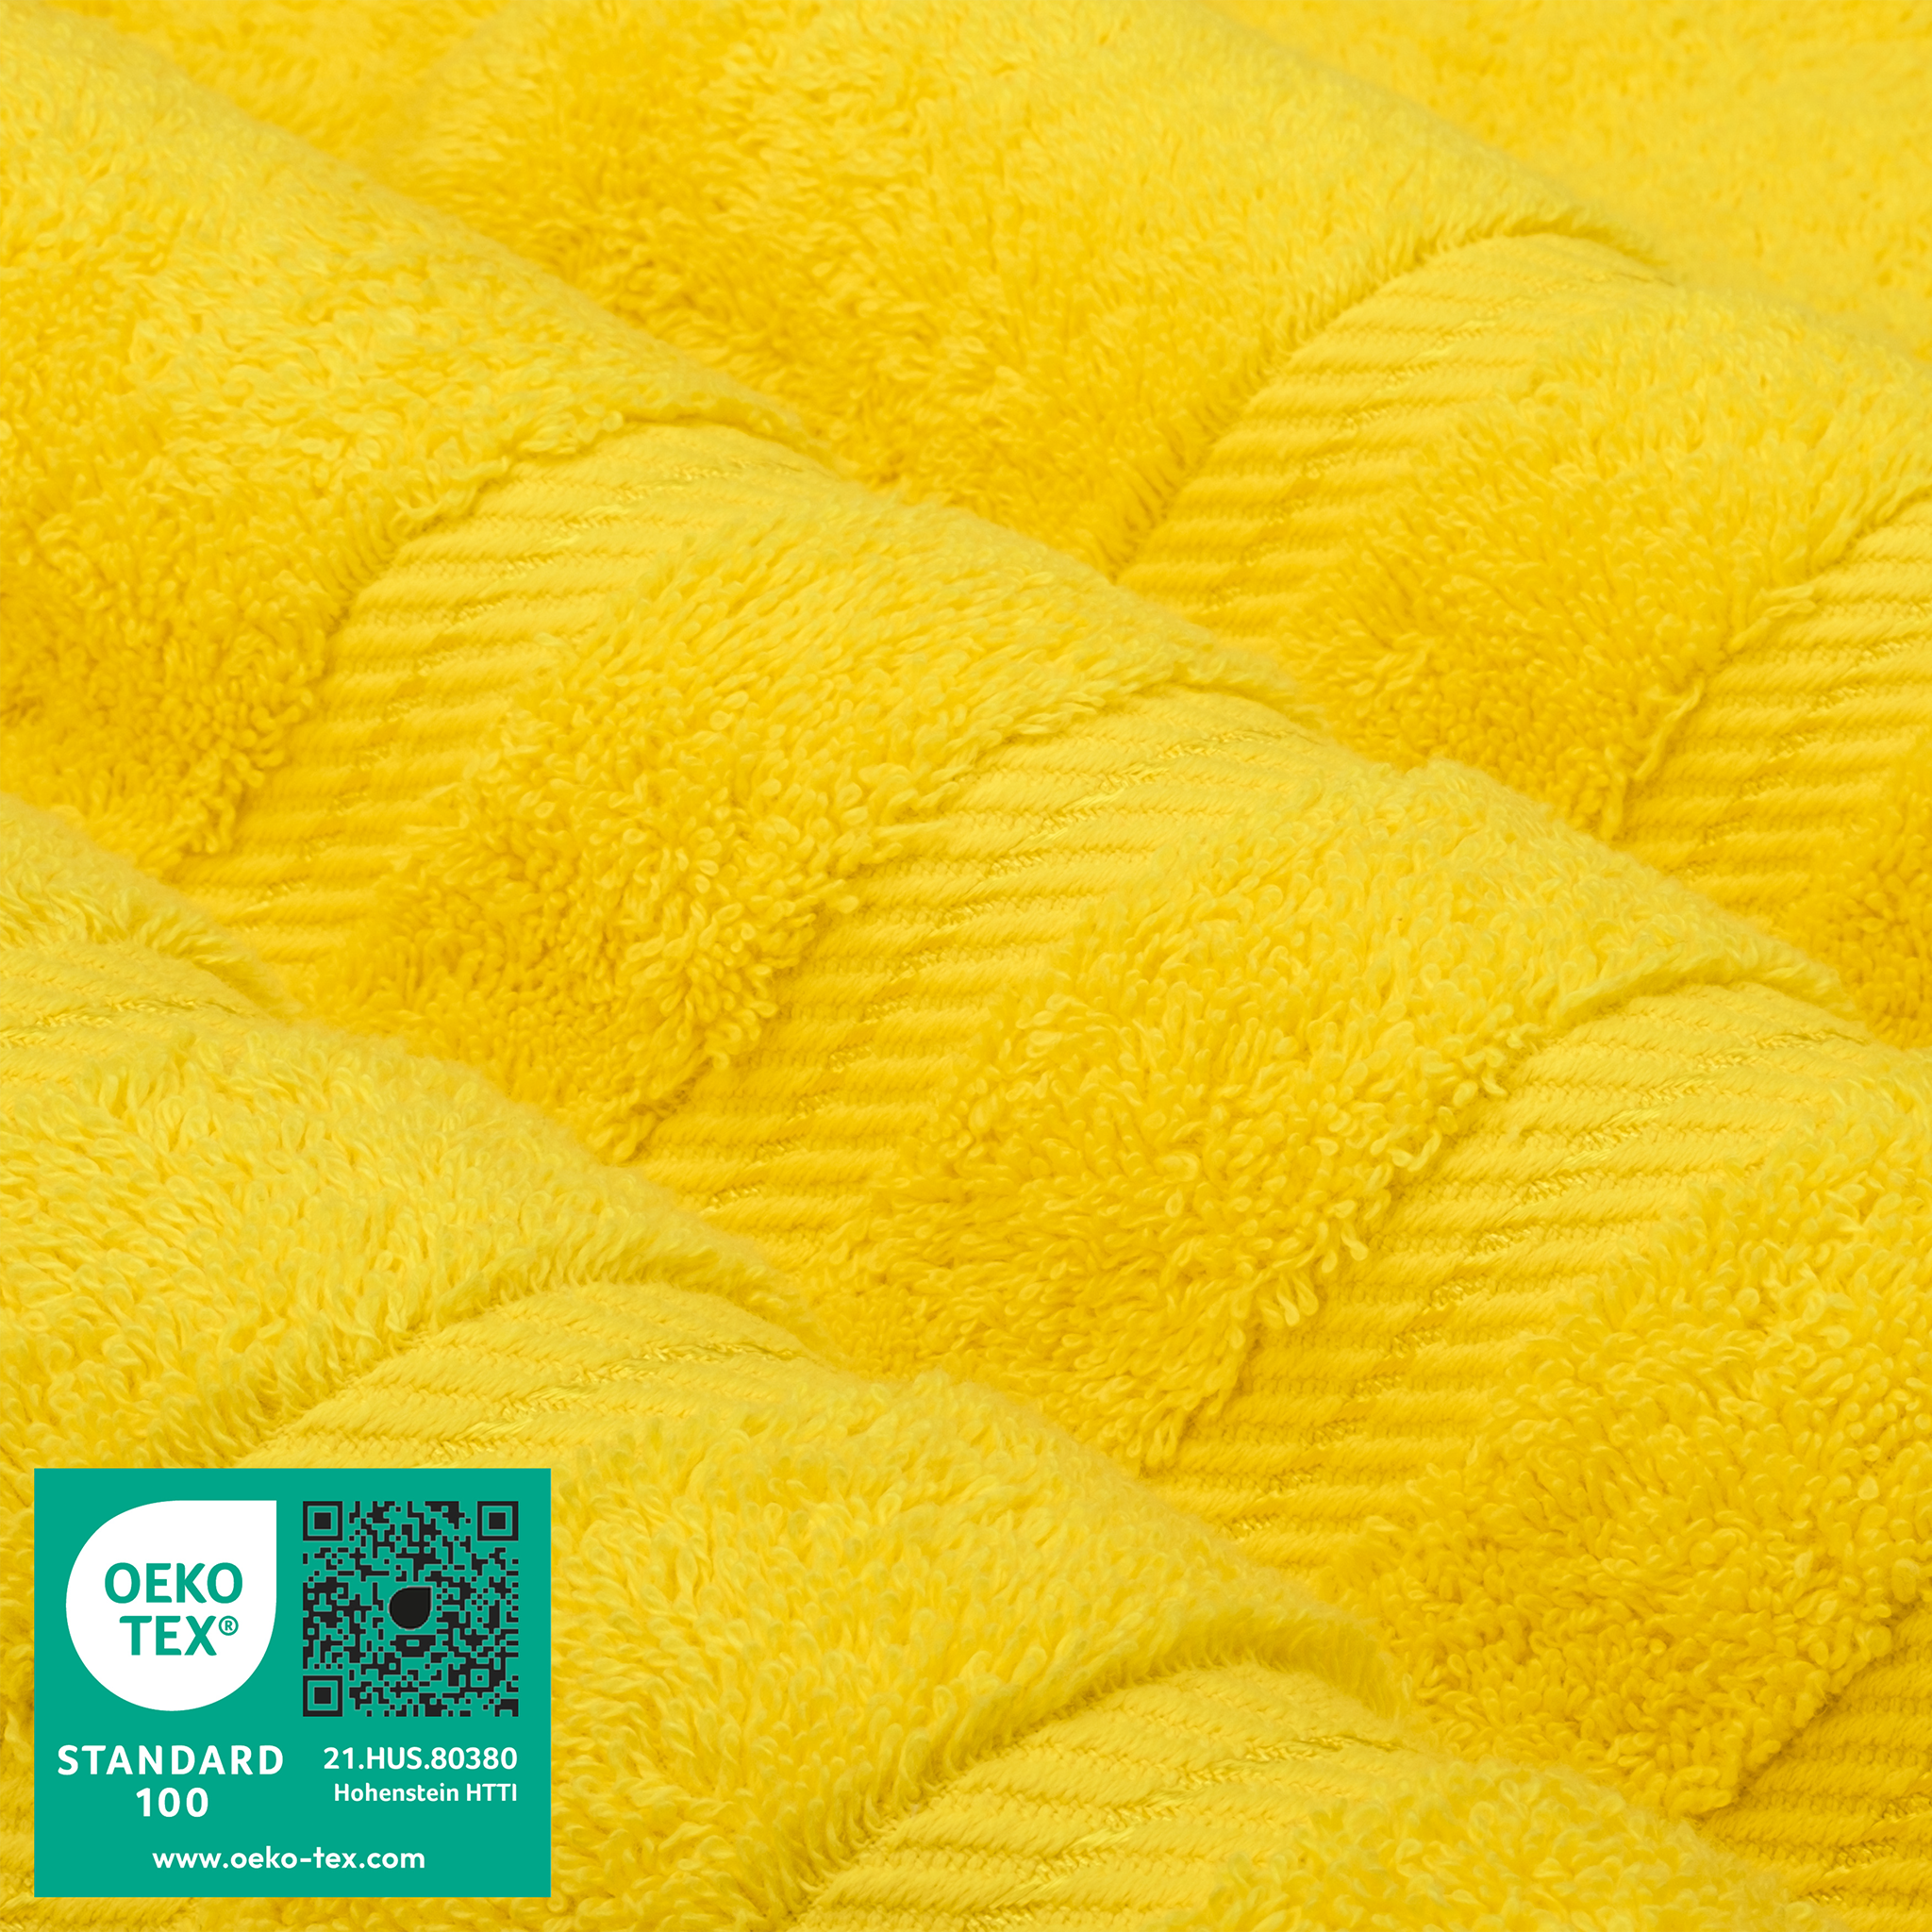 American Soft Linen - 3 Piece Turkish Cotton Towel Set - Yellow - 3